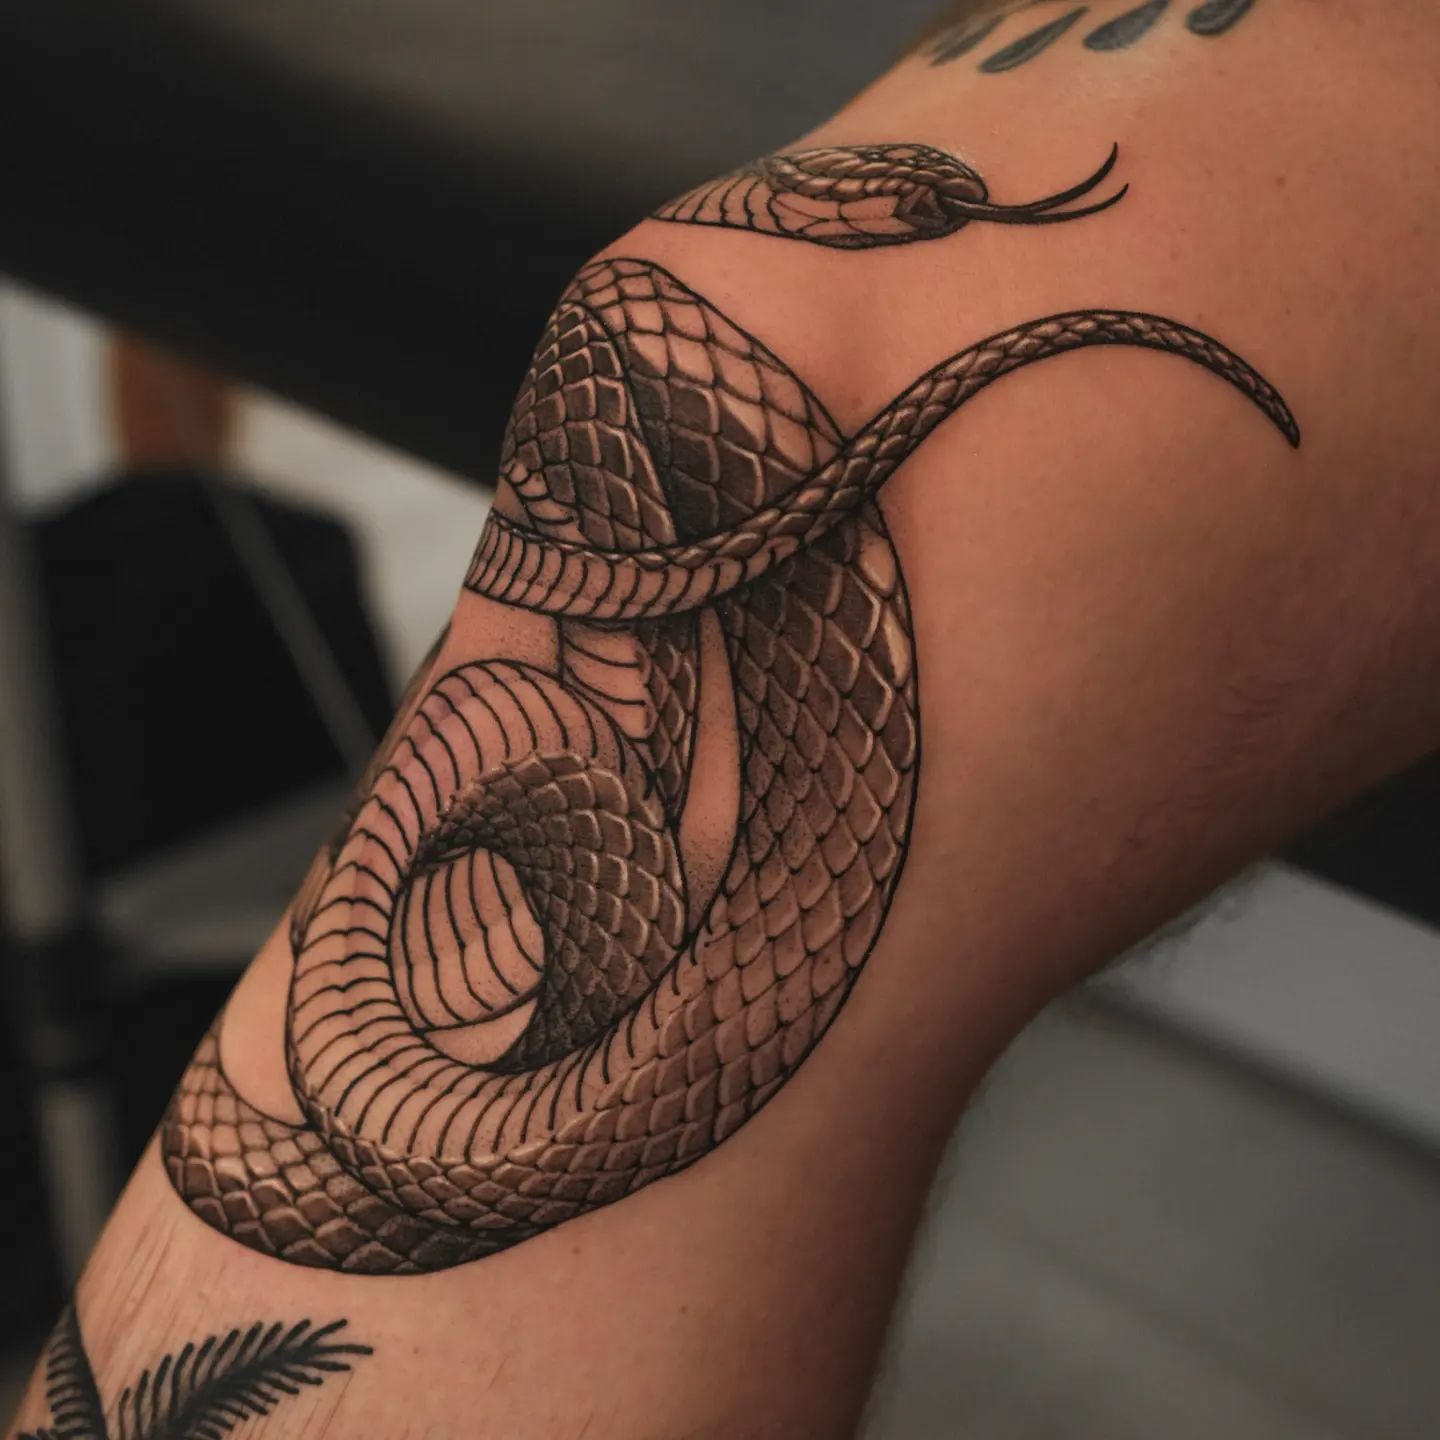 amazing snake tattoo by koonoblk